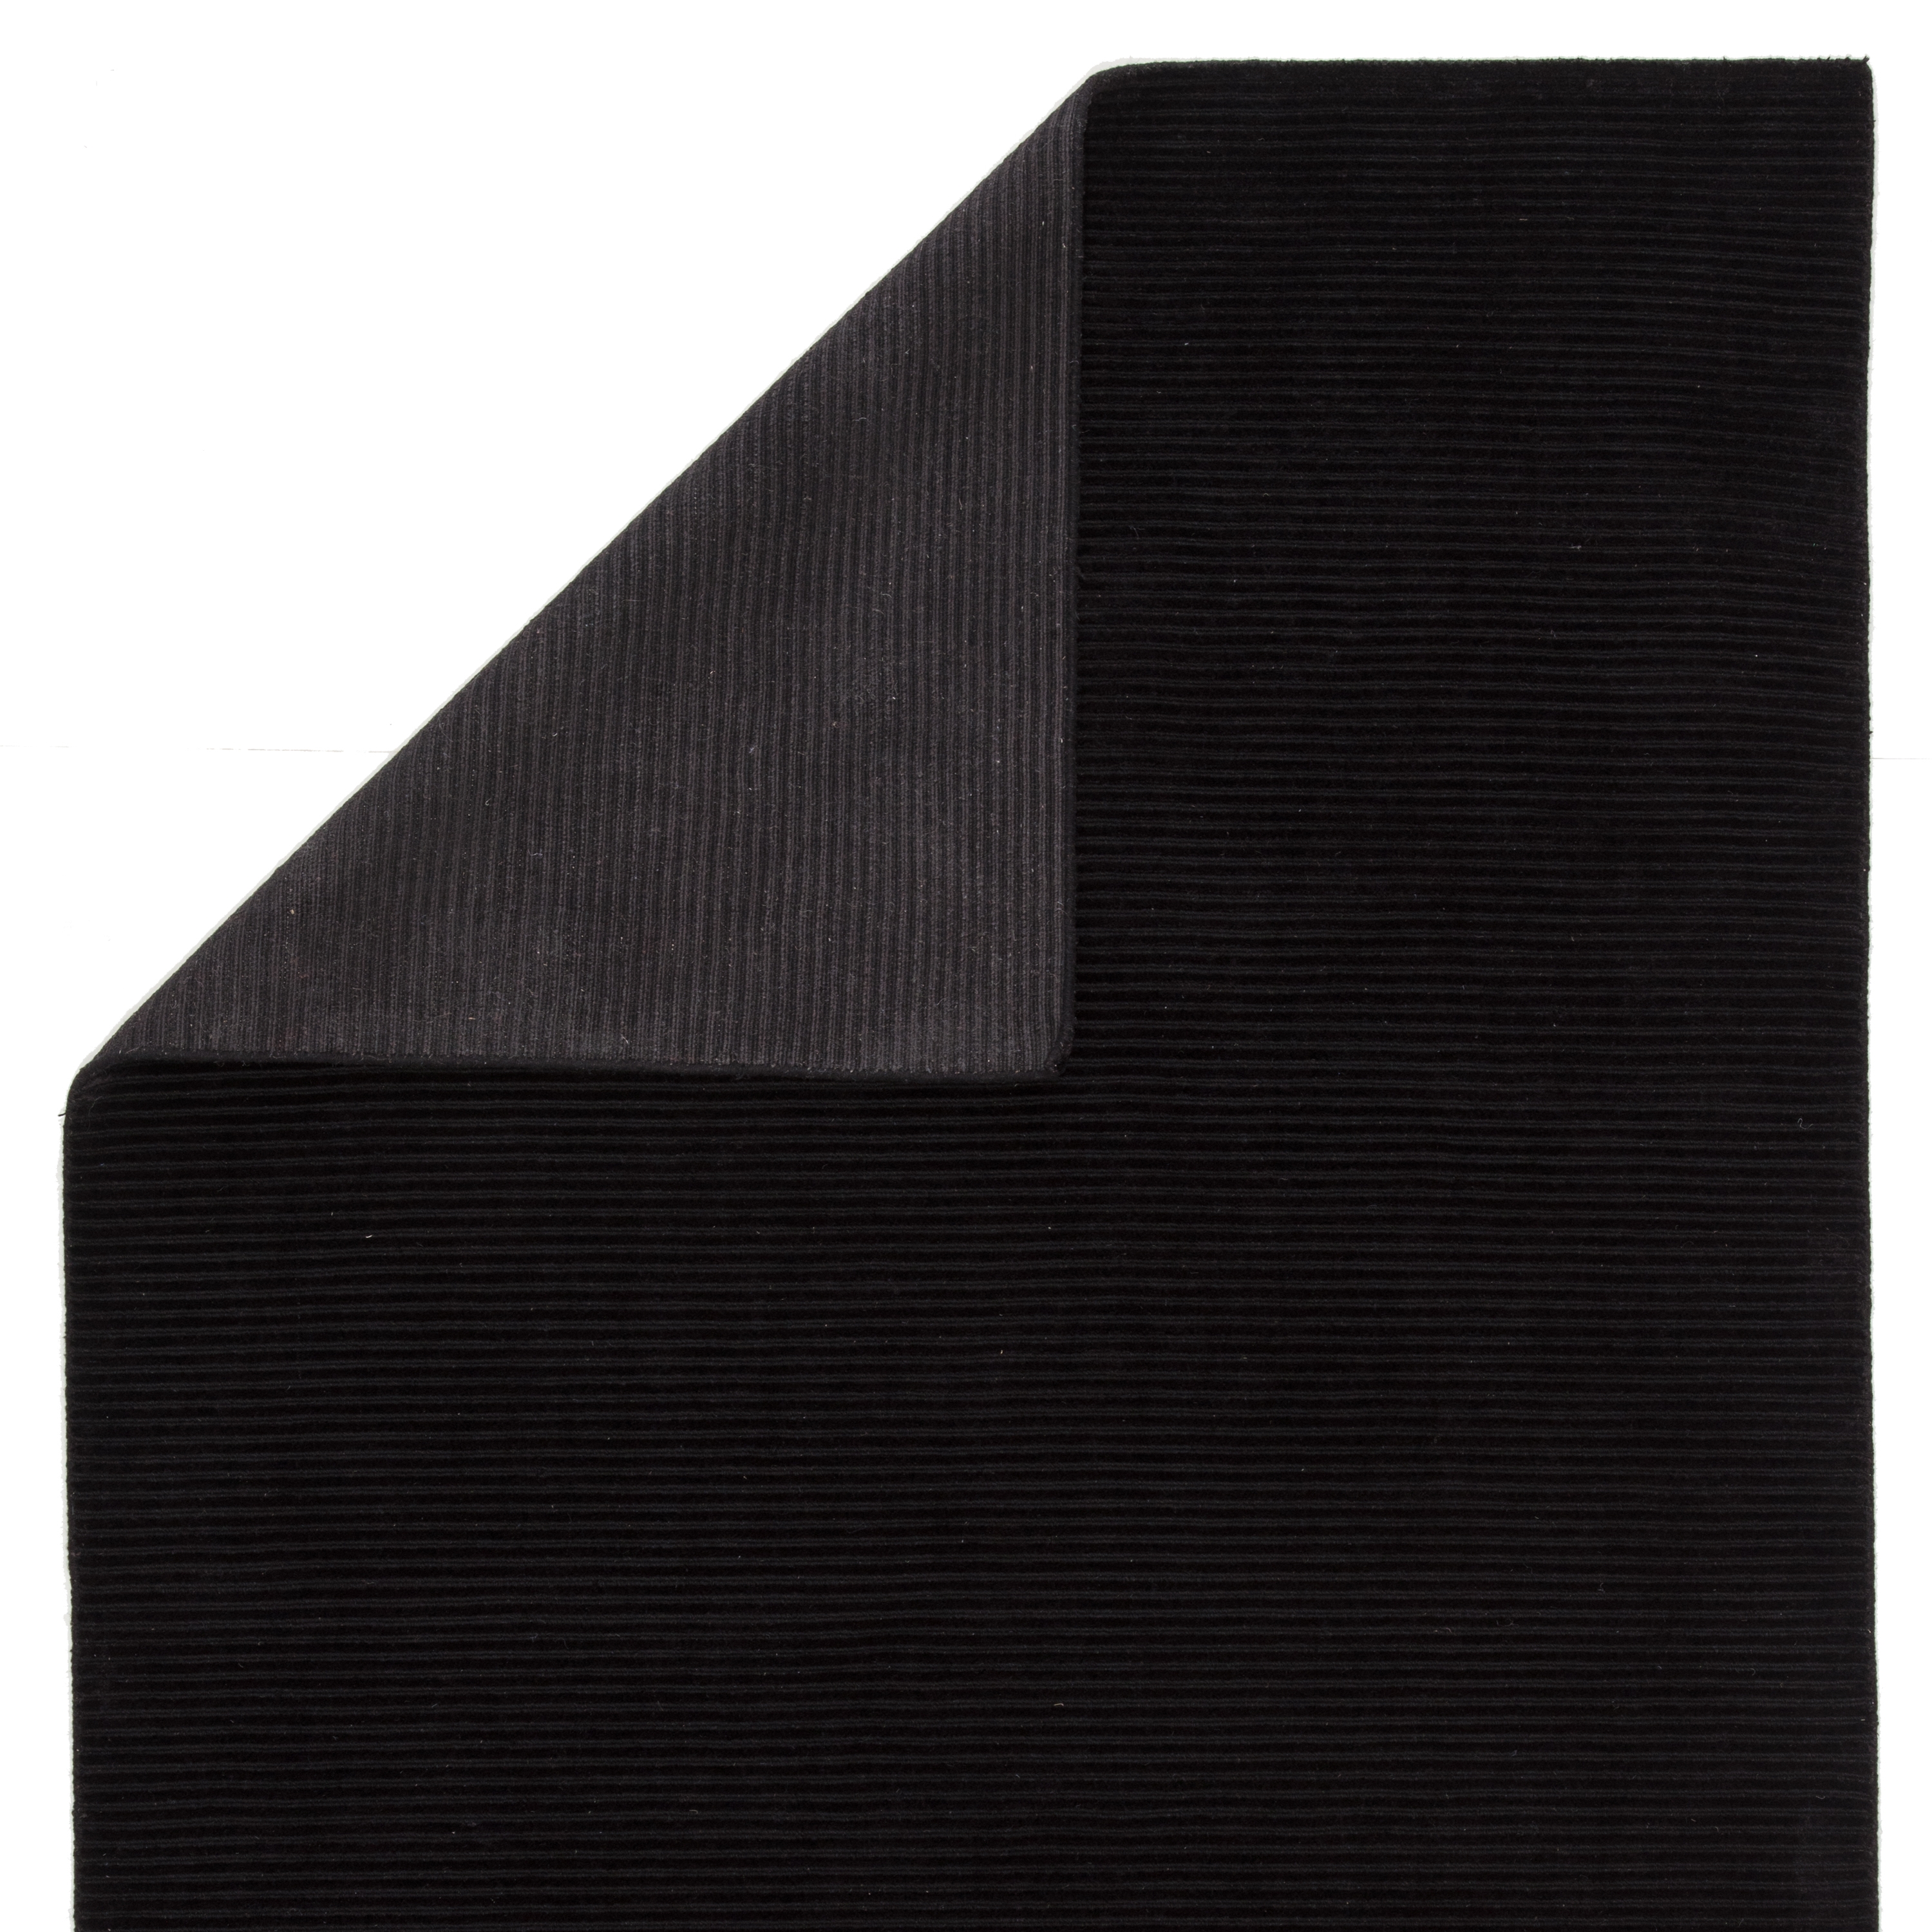 Basis Handmade Solid Black Runner Rug (2'6"X8') - Image 2